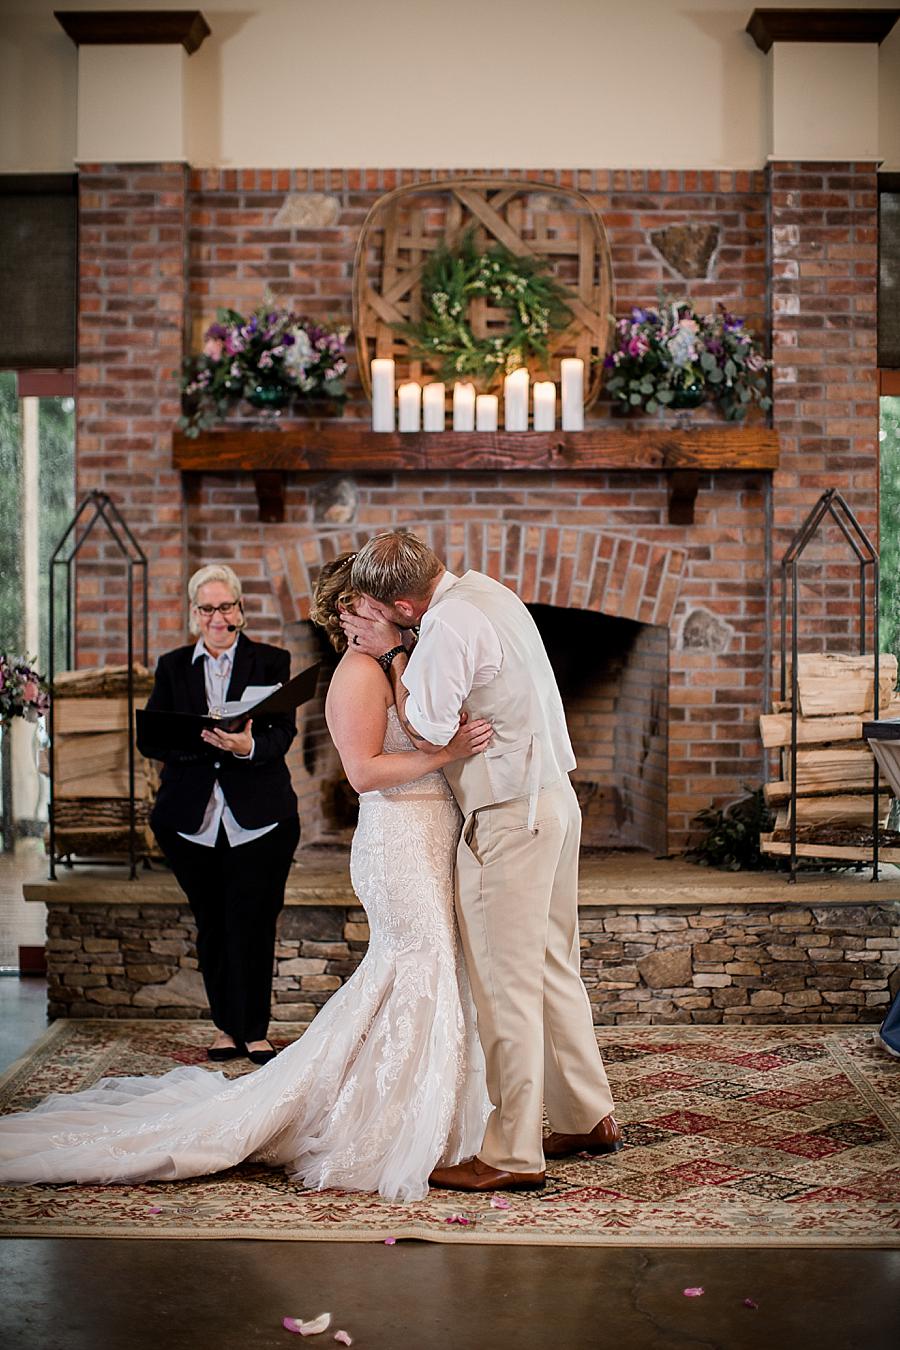 You may kiss the bride at this Hunter Valley Pavilion Wedding by Knoxville Wedding Photographer, Amanda May Photos.